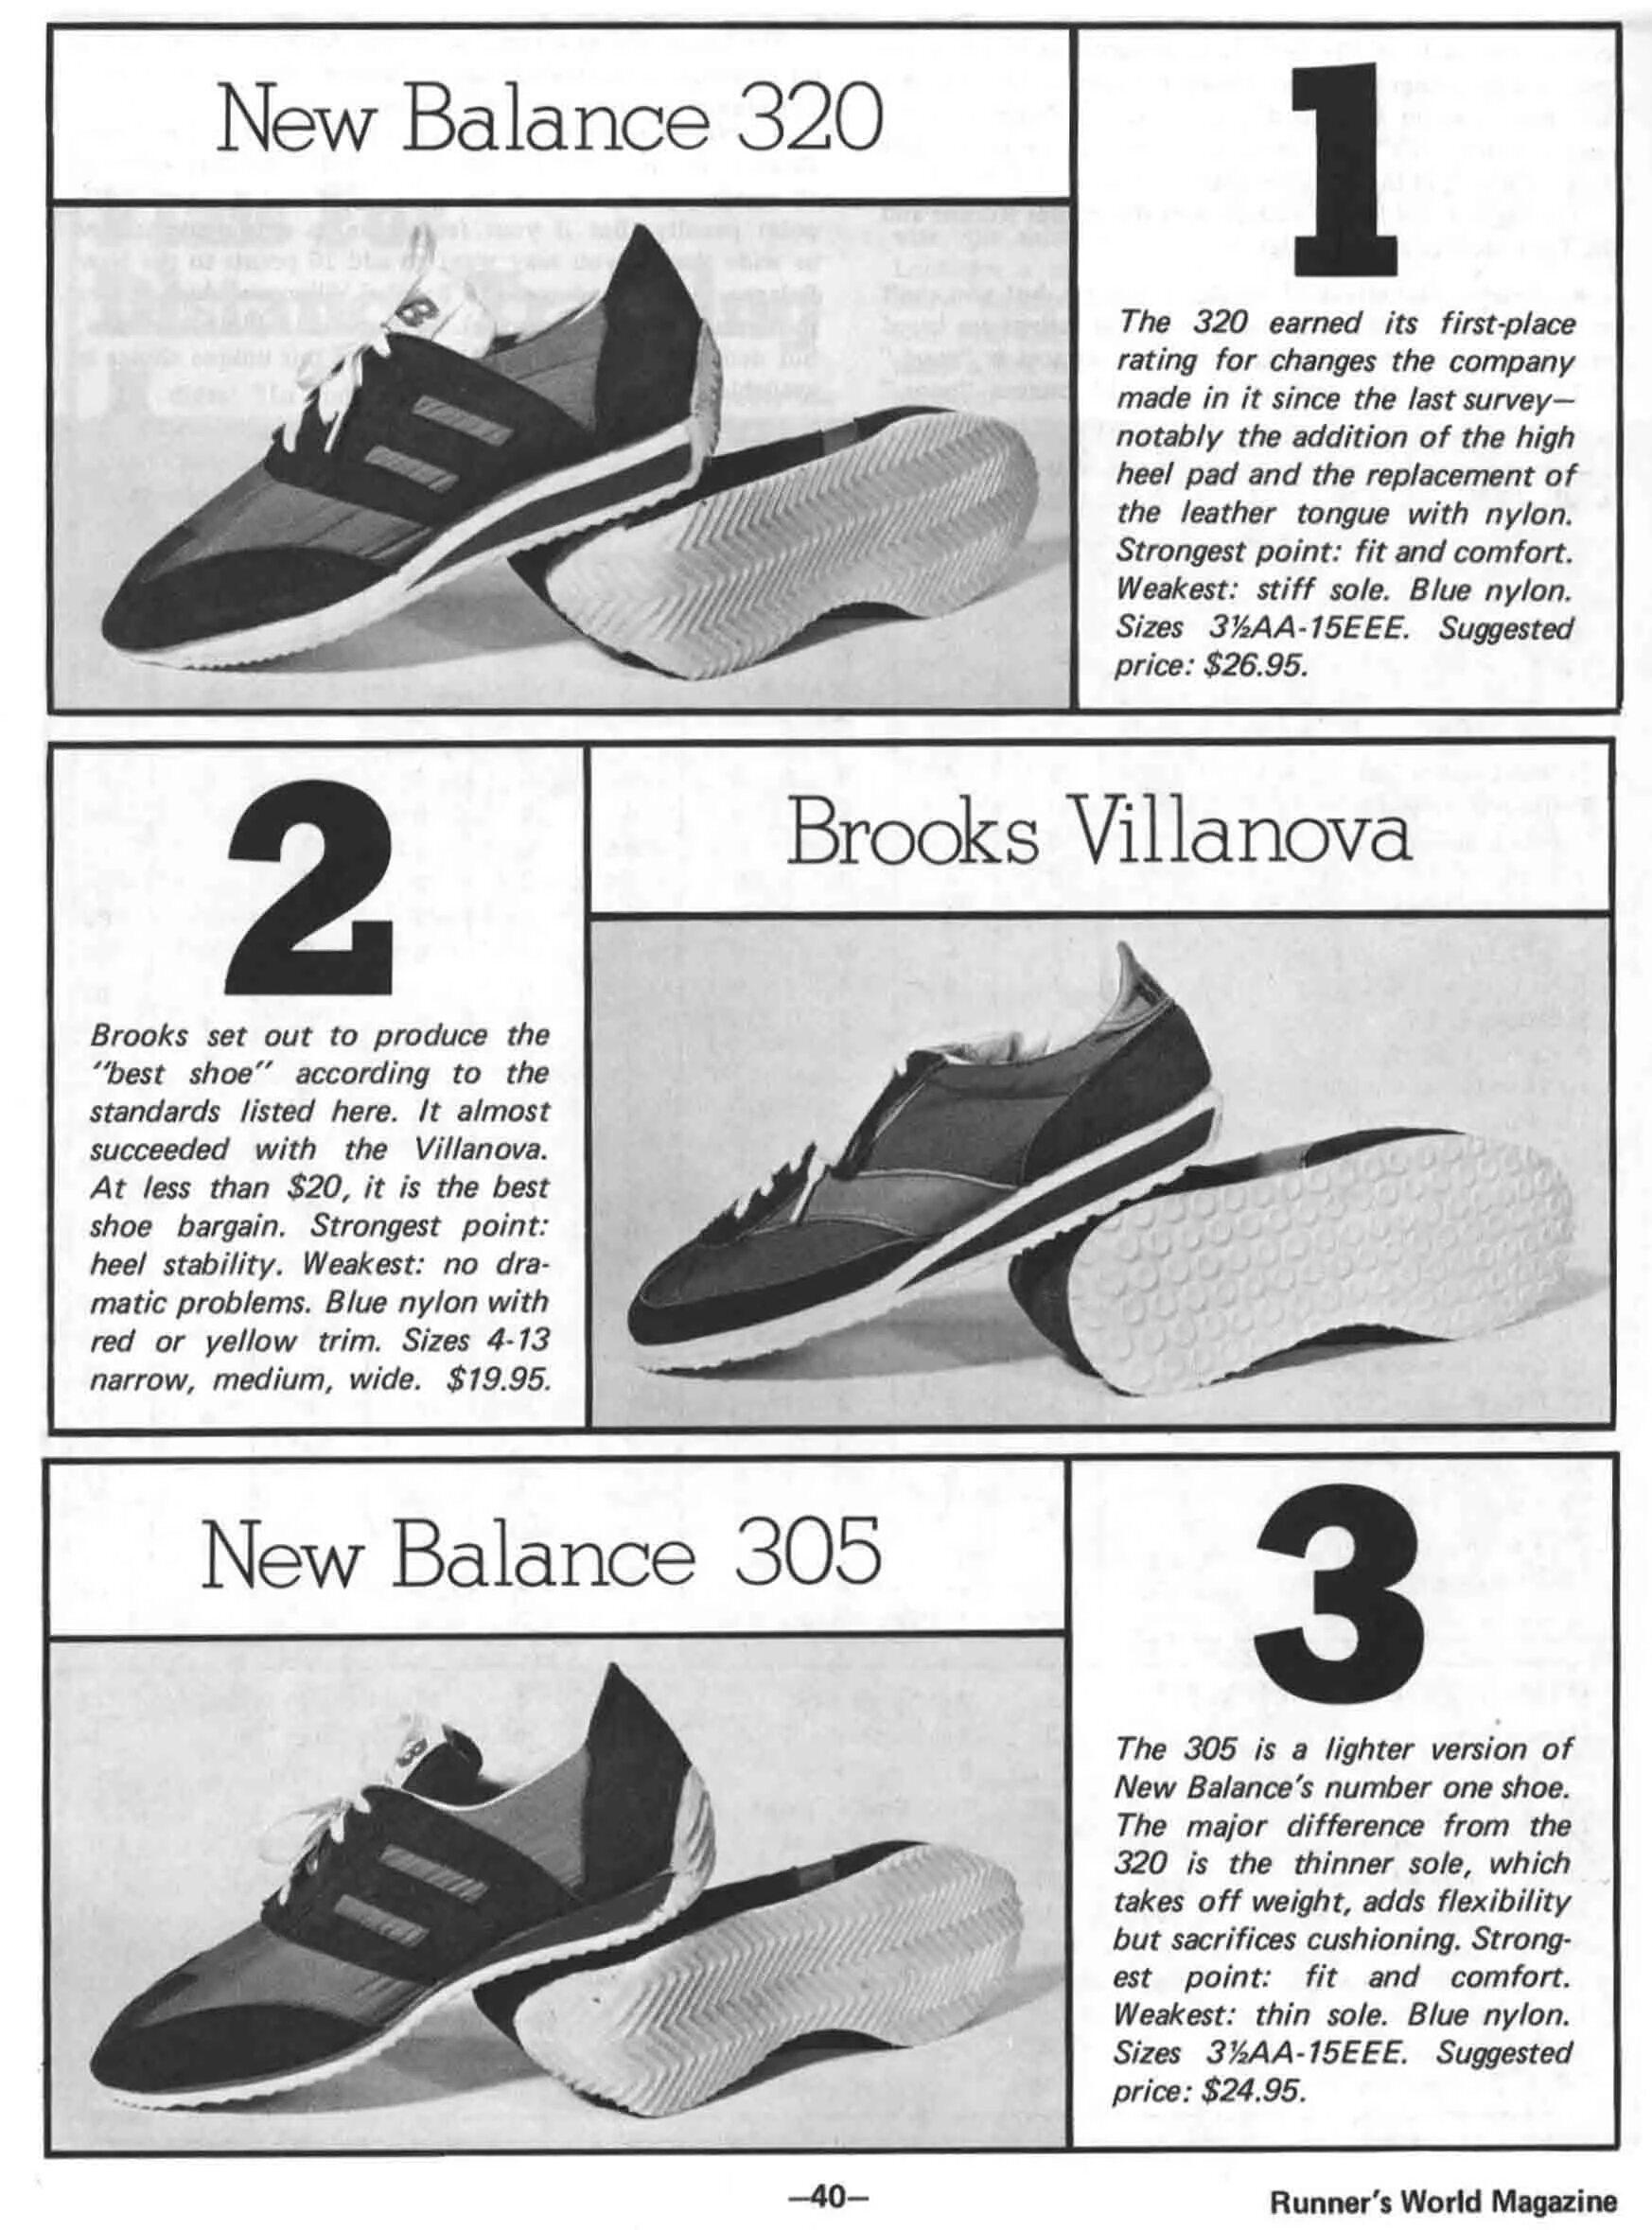 New Balance 1906u. New Balance Boss Shoes 1906. New Balance Trackster первые кроссовки. New Balance первые модели. New balance история